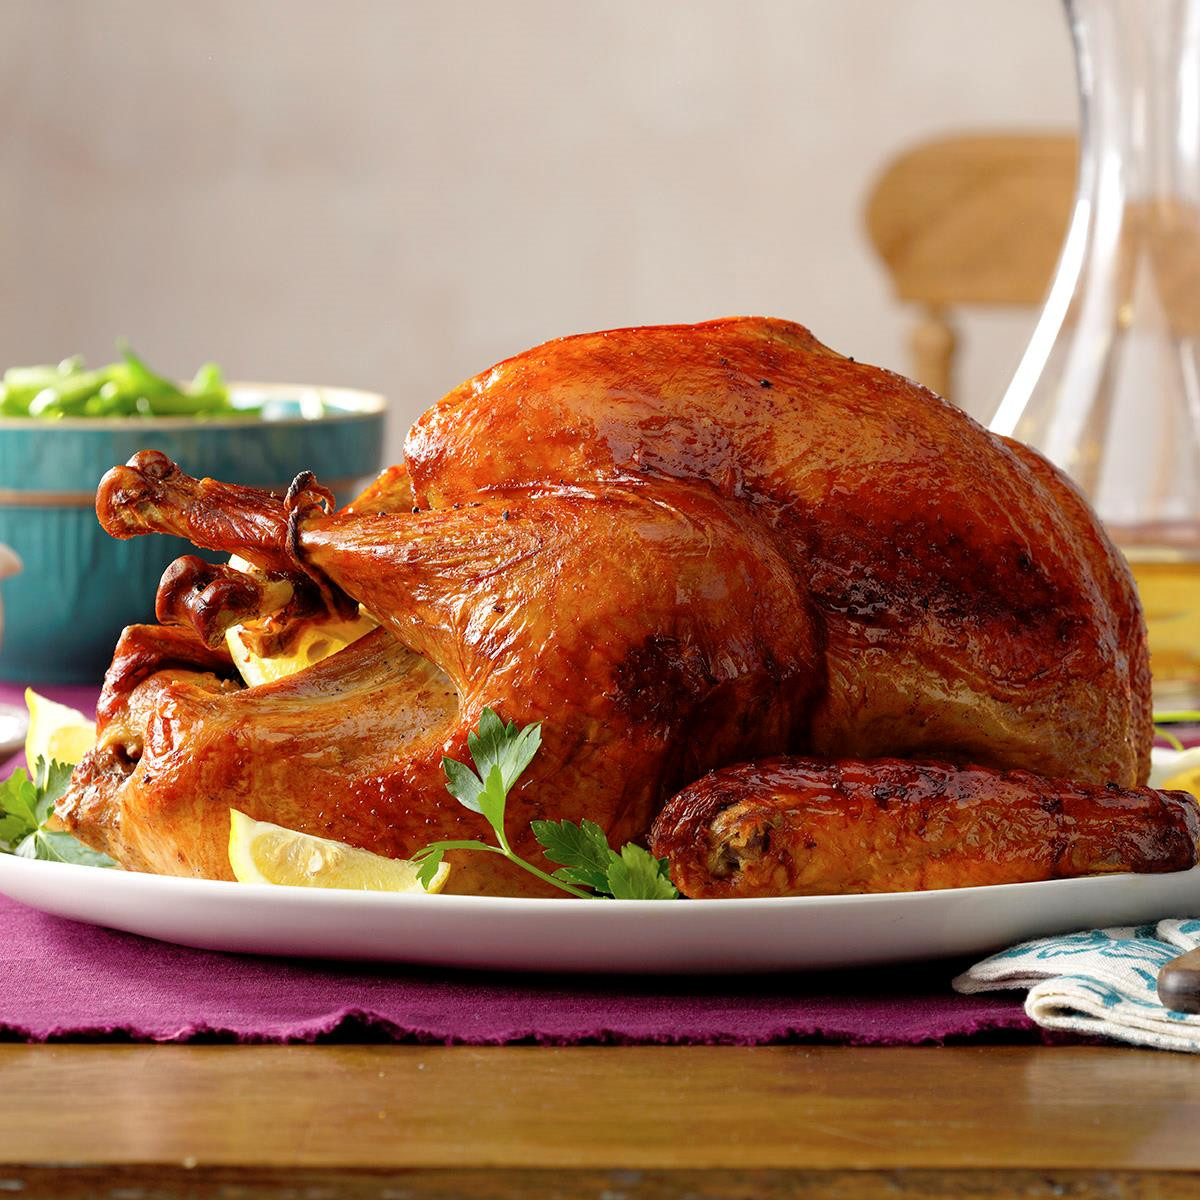 Thanksgiving Turkey Image
 The Ultimate Thanksgiving Dinner Menu